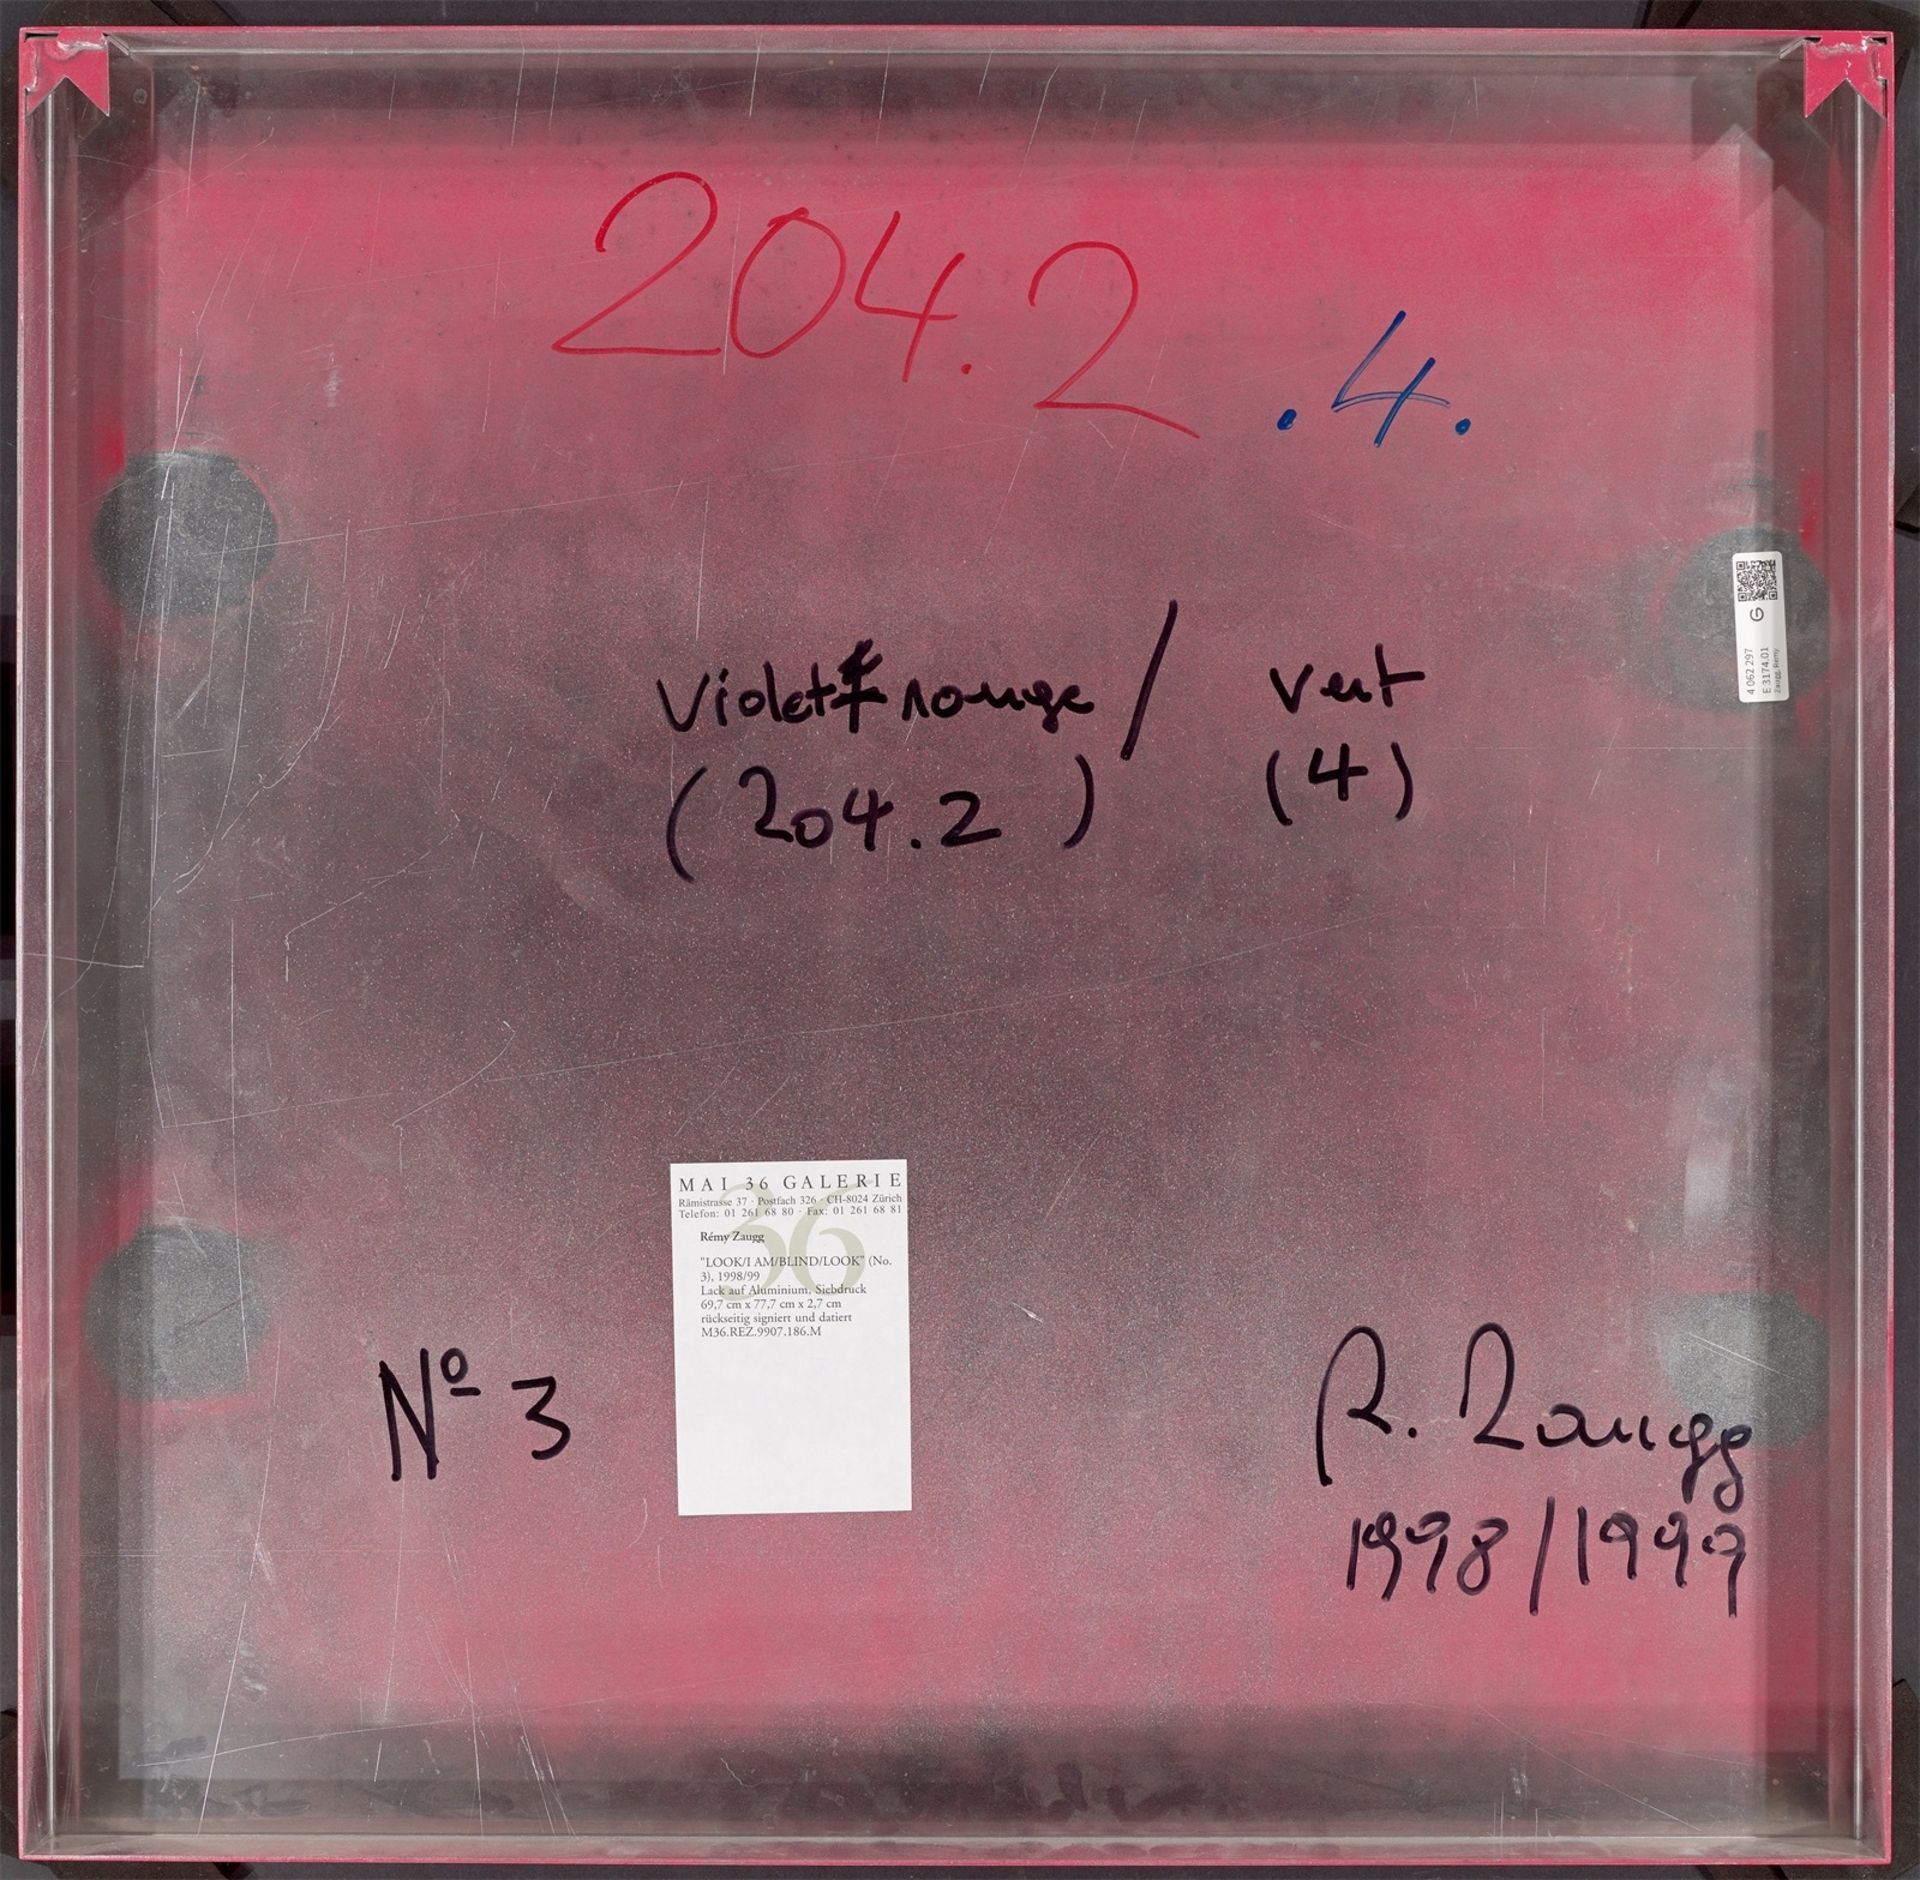 Rémy Zaugg. ”LOOK,/I AM/BLIND,/LOOK., (No. 3) (violet-rouge/vert)”. 1998/99 - Image 2 of 2